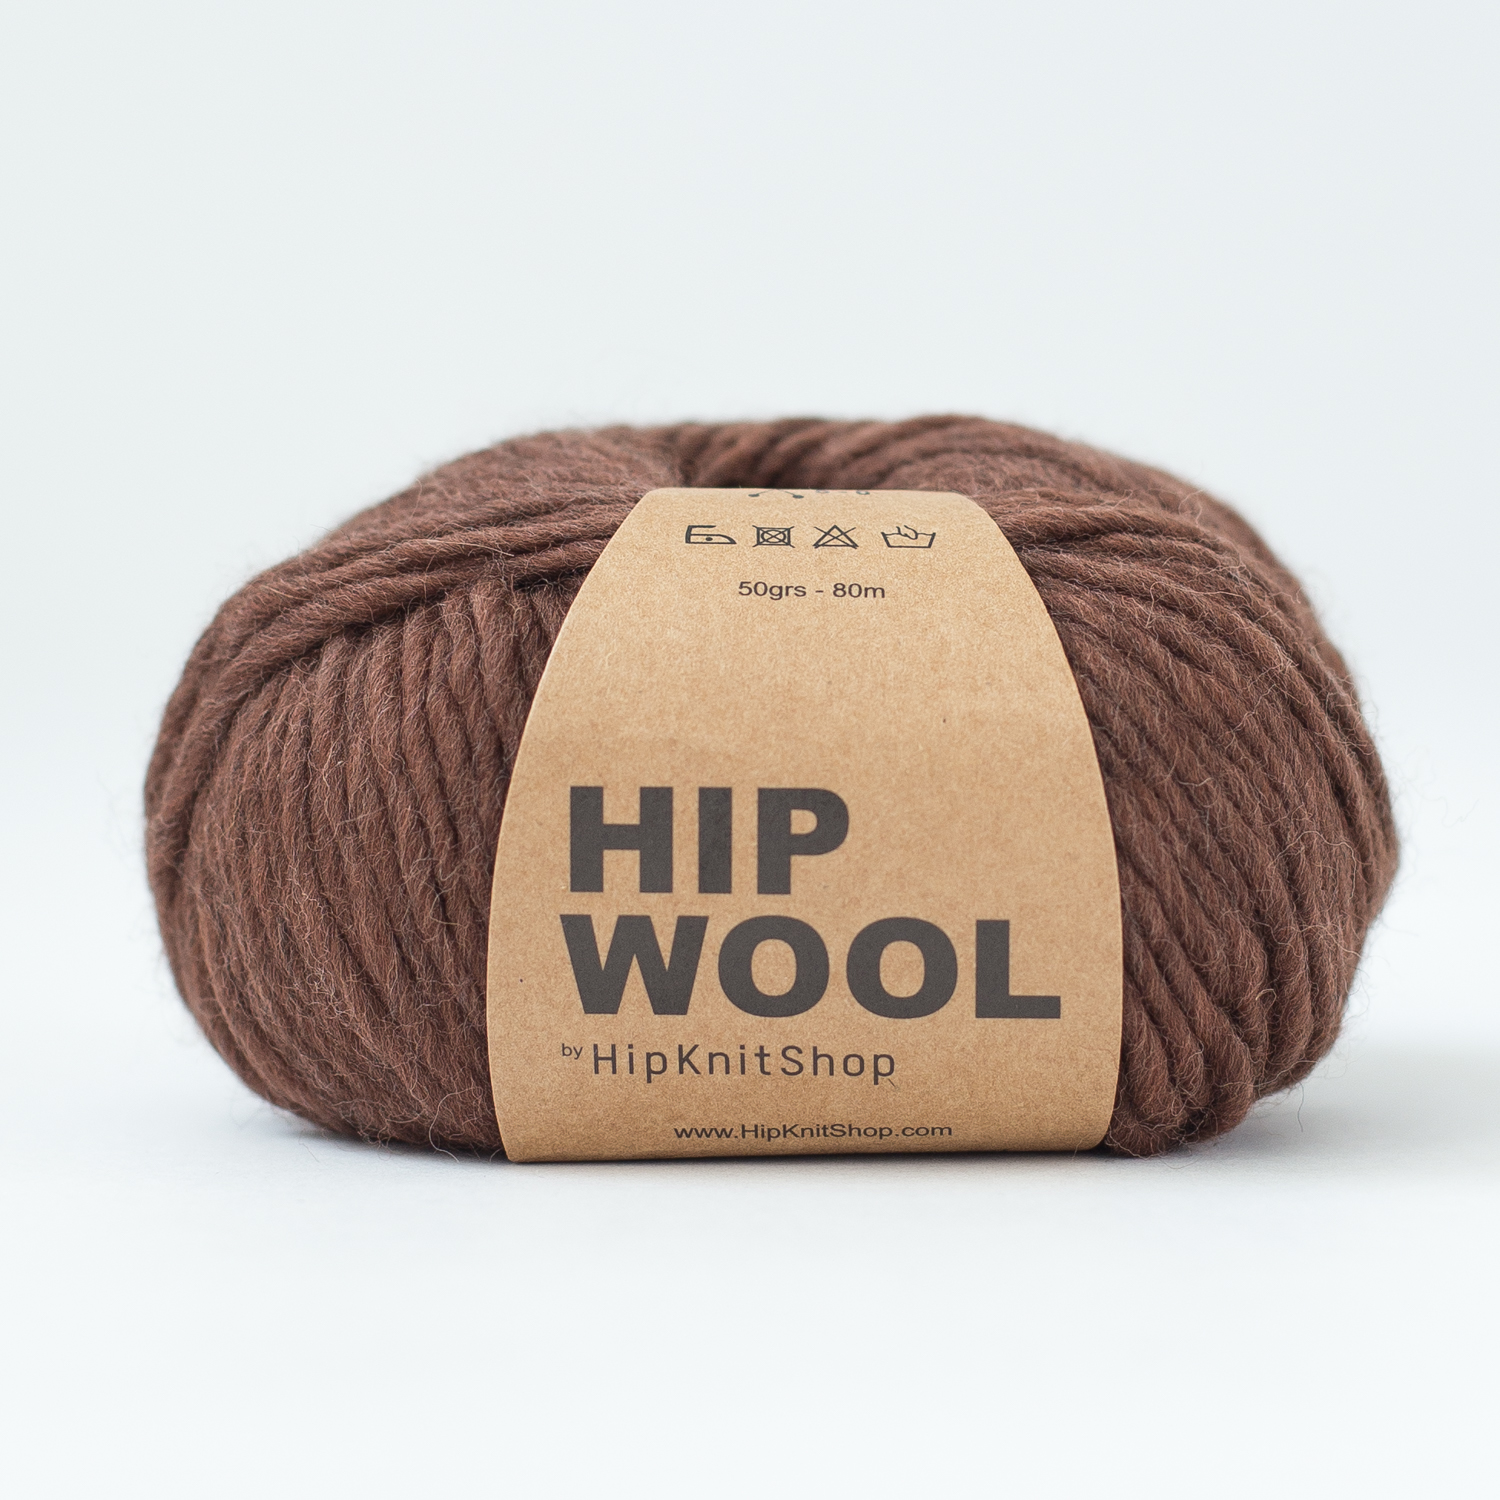 hip wool yarn - Chocolate crush brown - 17/08/2017